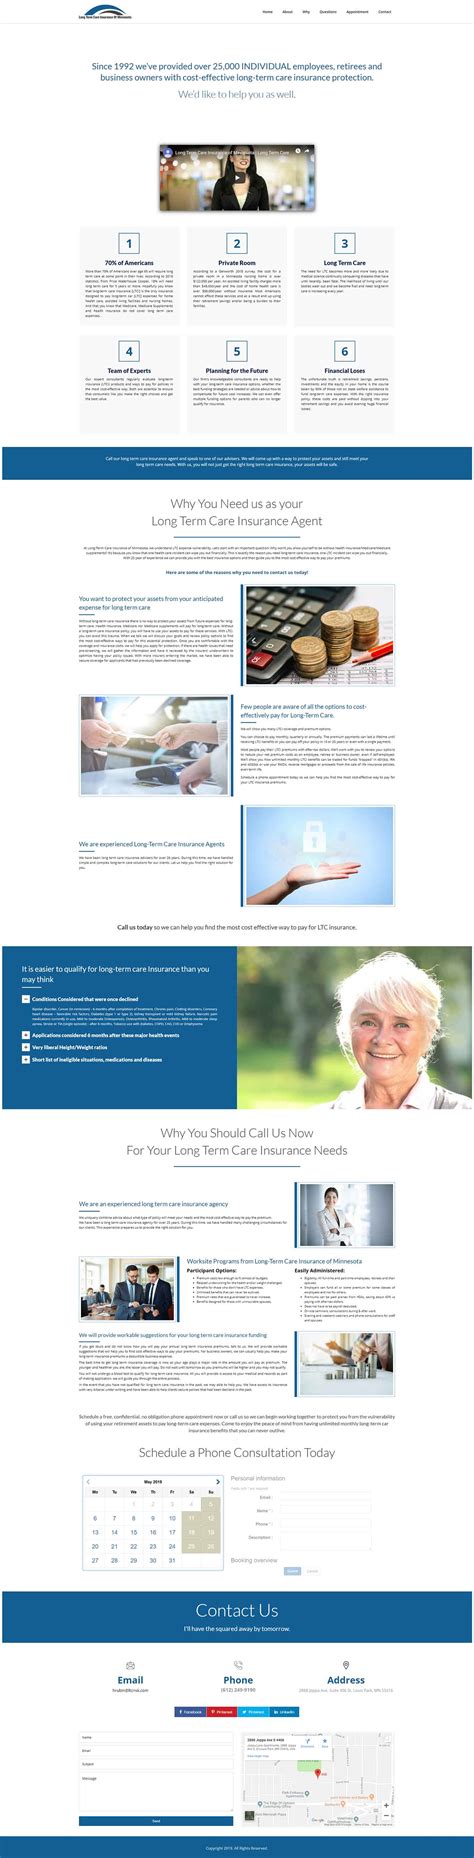 How else can i pay for long term care? Long Term Care Insurance of Minnesota - Pixaflo Marketing